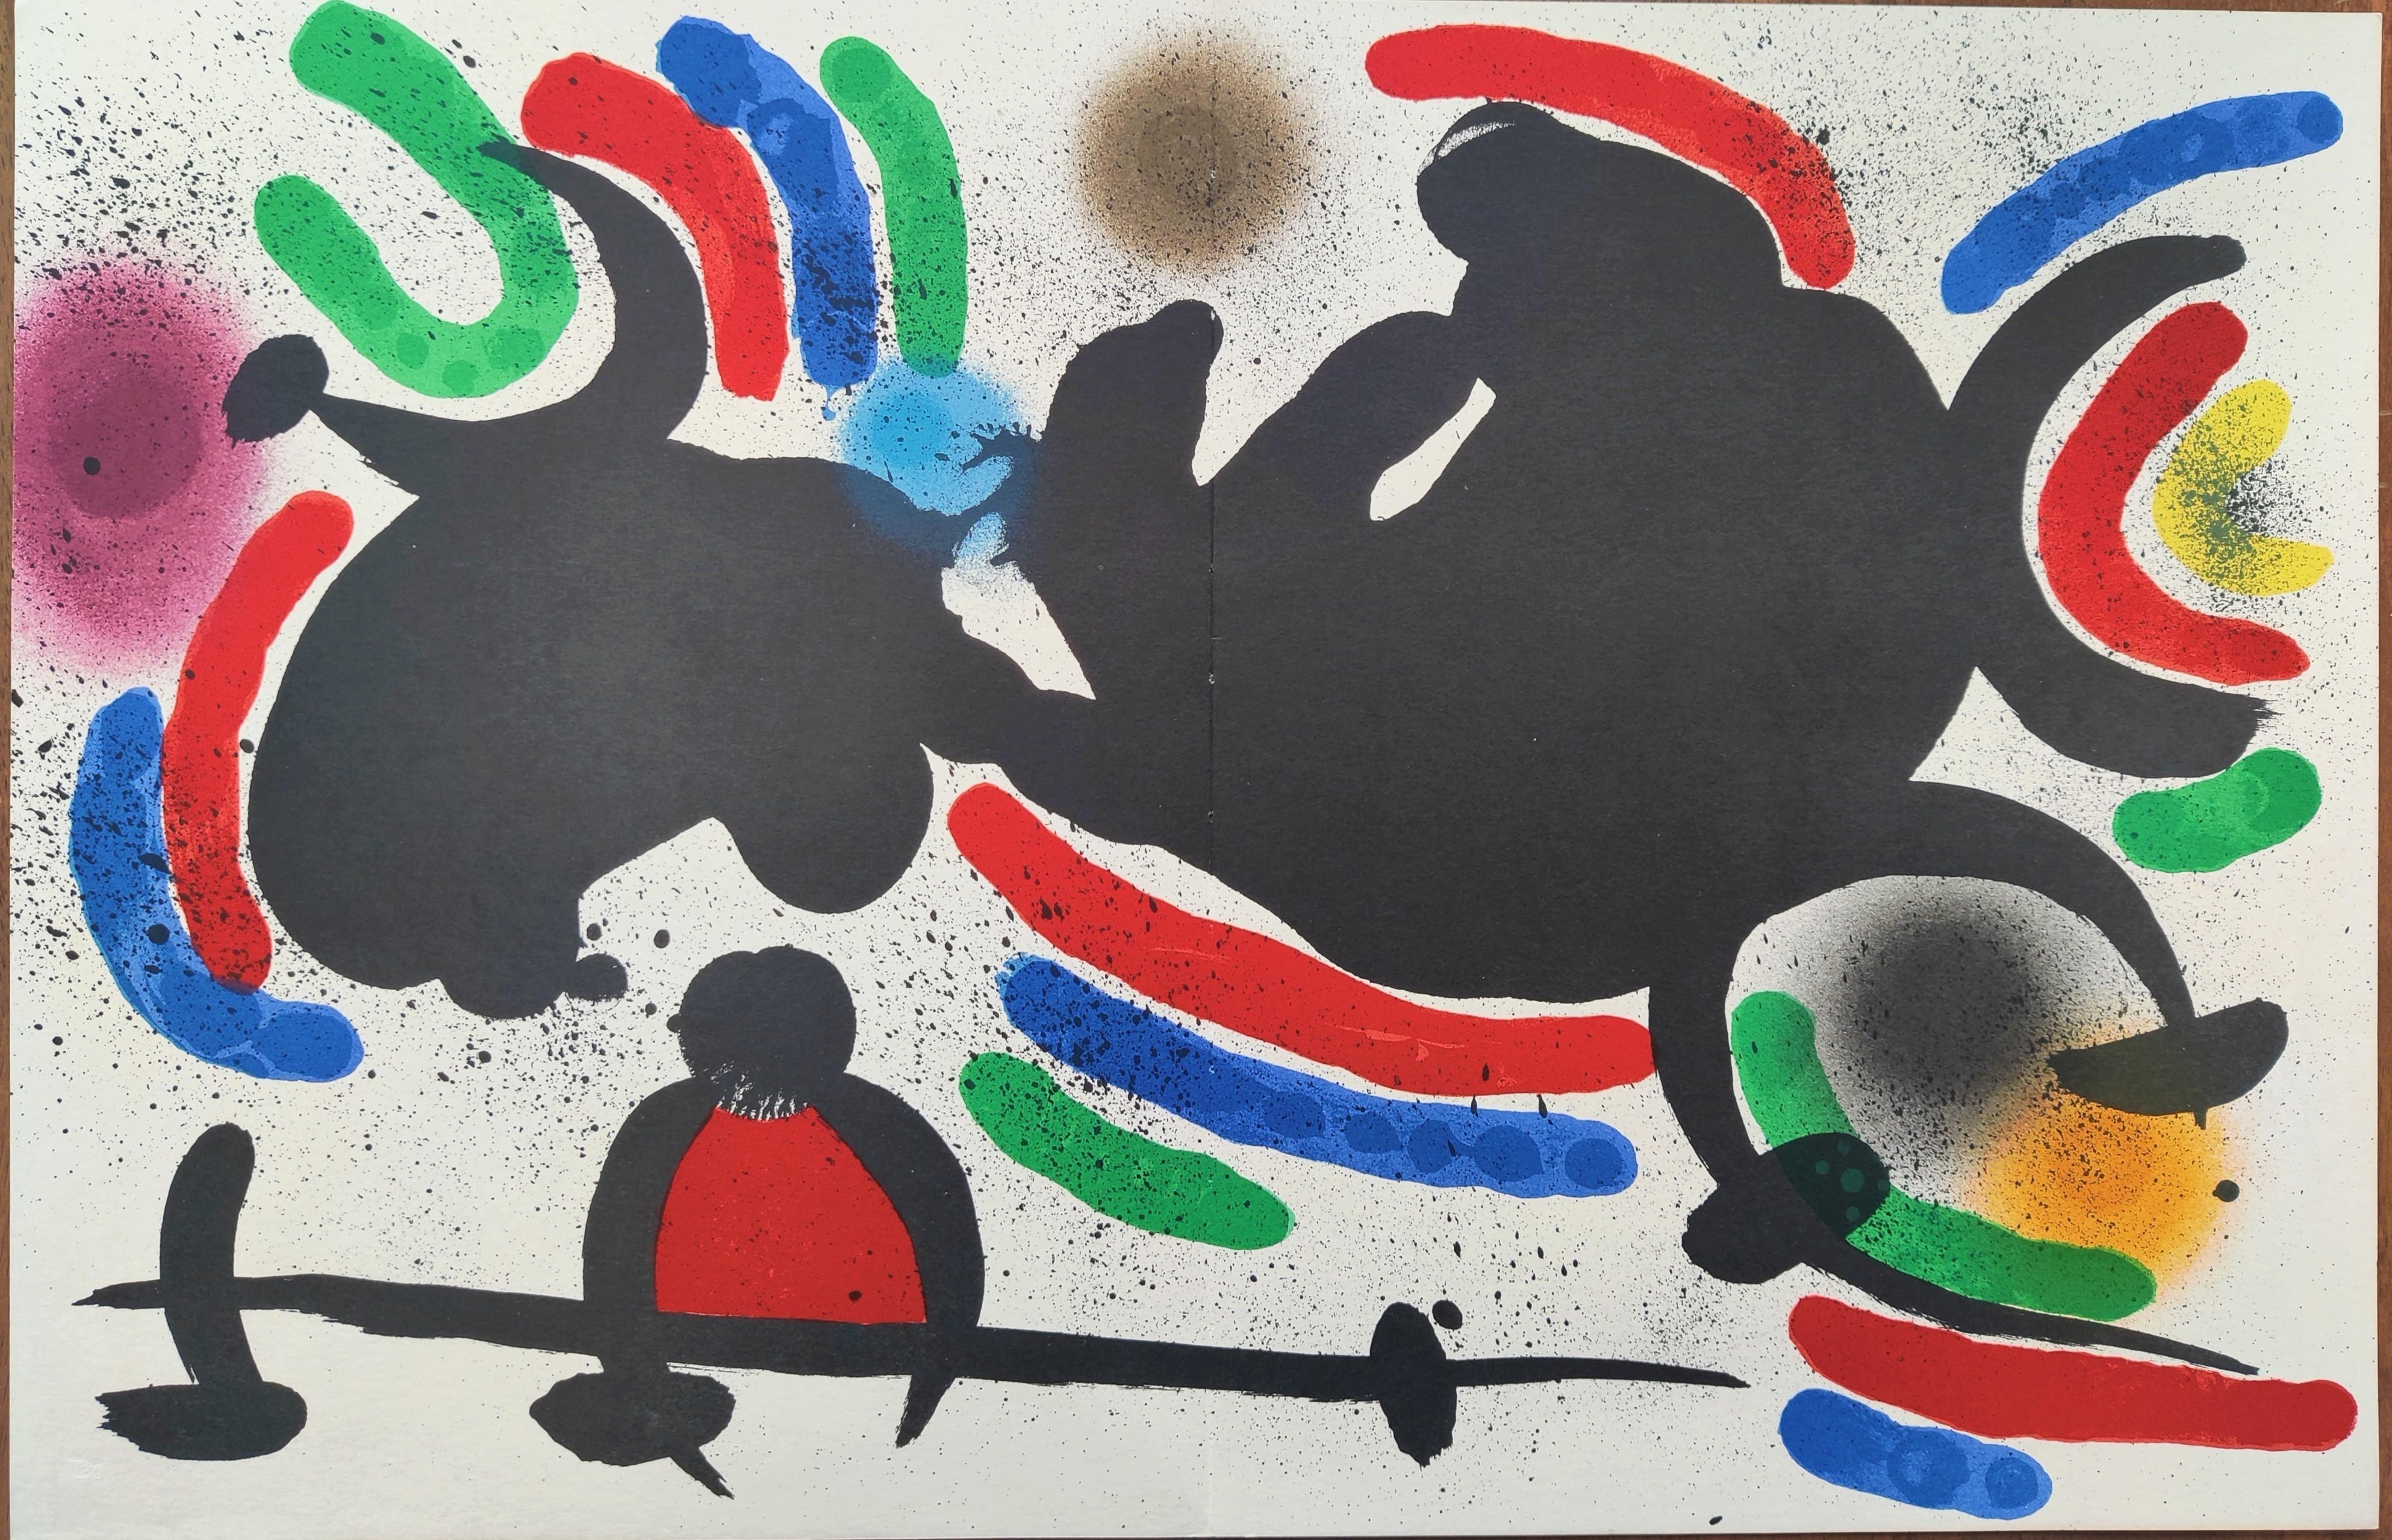 Joan Miró --  Lithographie I, Platte IV, 1972
Farblithographie
Verlag: Ediciones Poligrafa, S.A., Barcelona
Katalog: Mourlot 866
Größe: 42,5 × 60 cm 
Vorzeichenlos